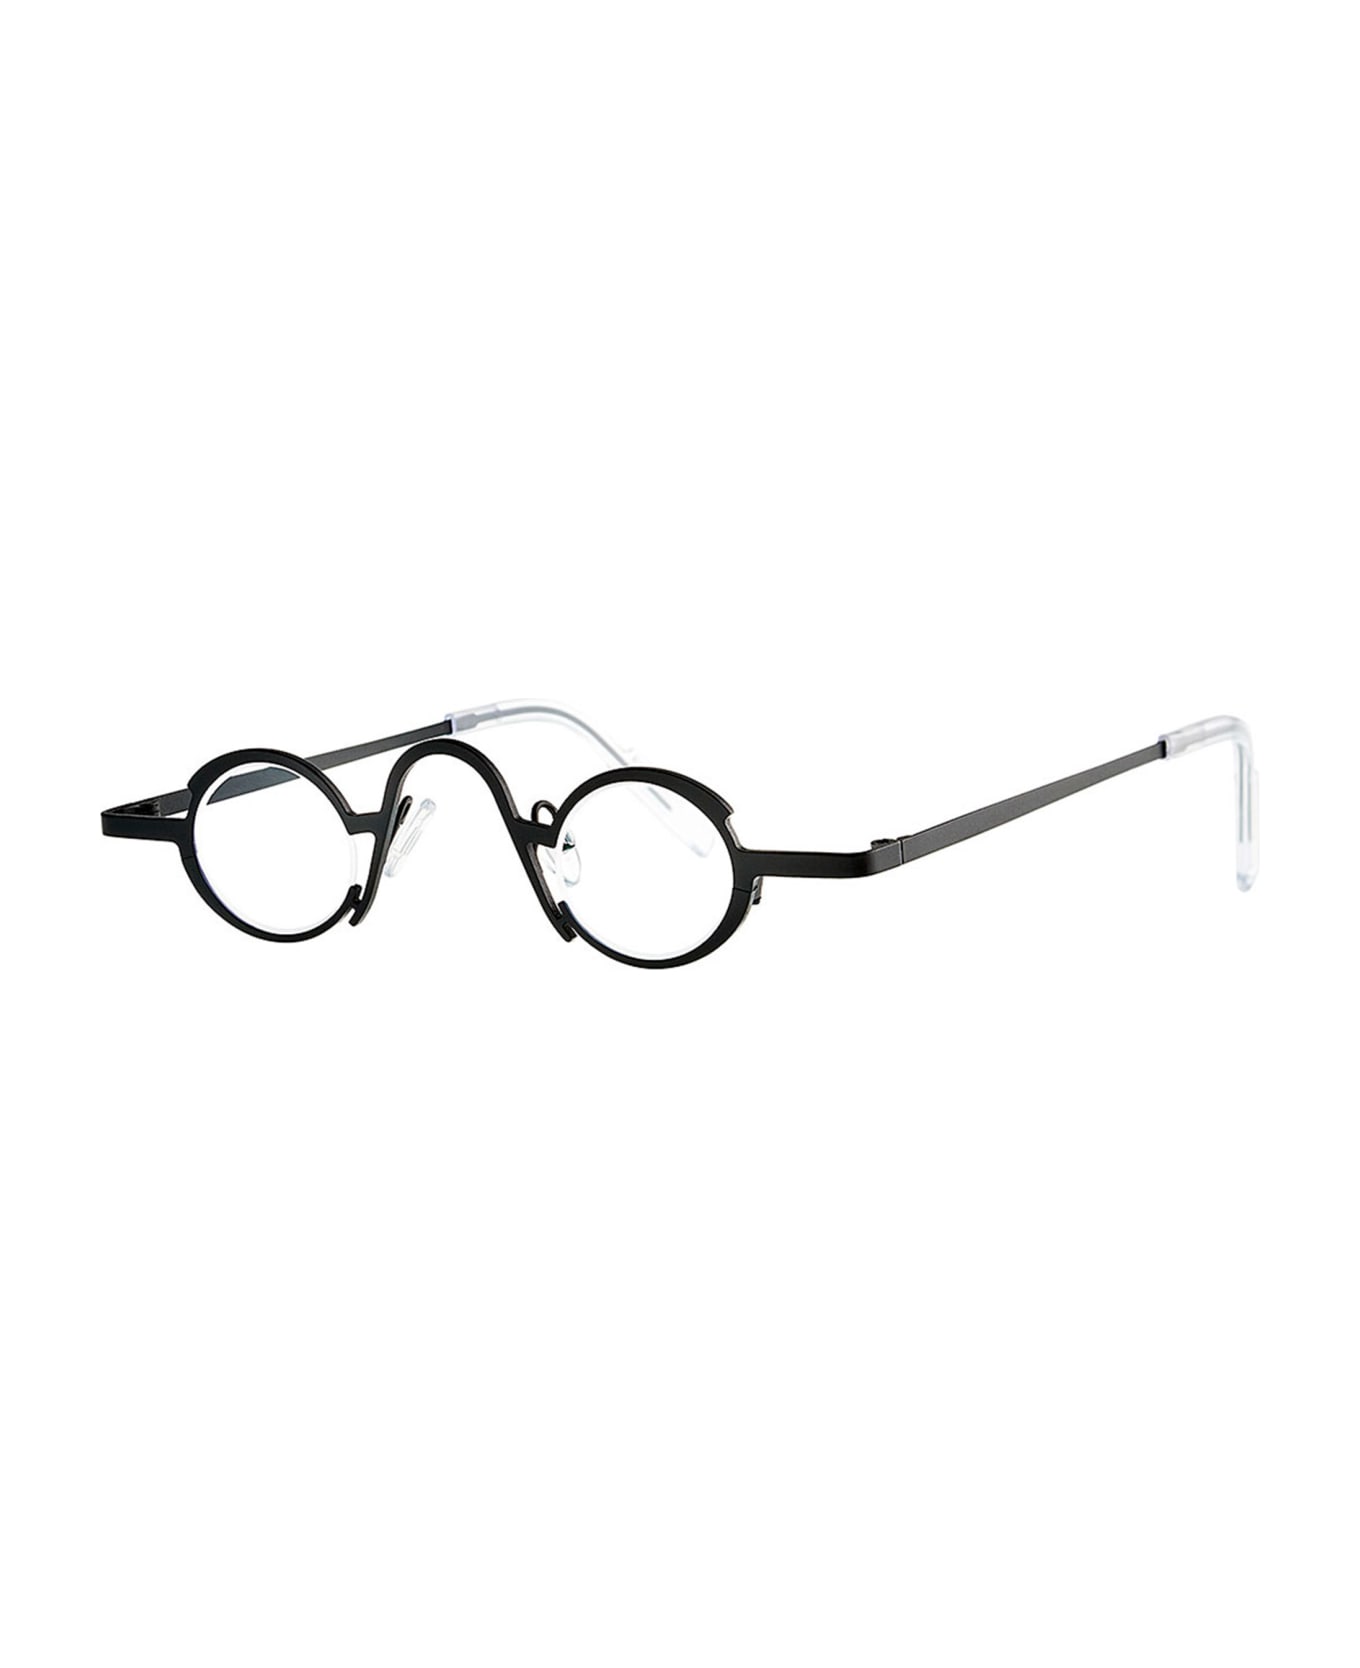 Theo Eyewear Vibration - Black Matte Rx Glasses - black matte アイウェア